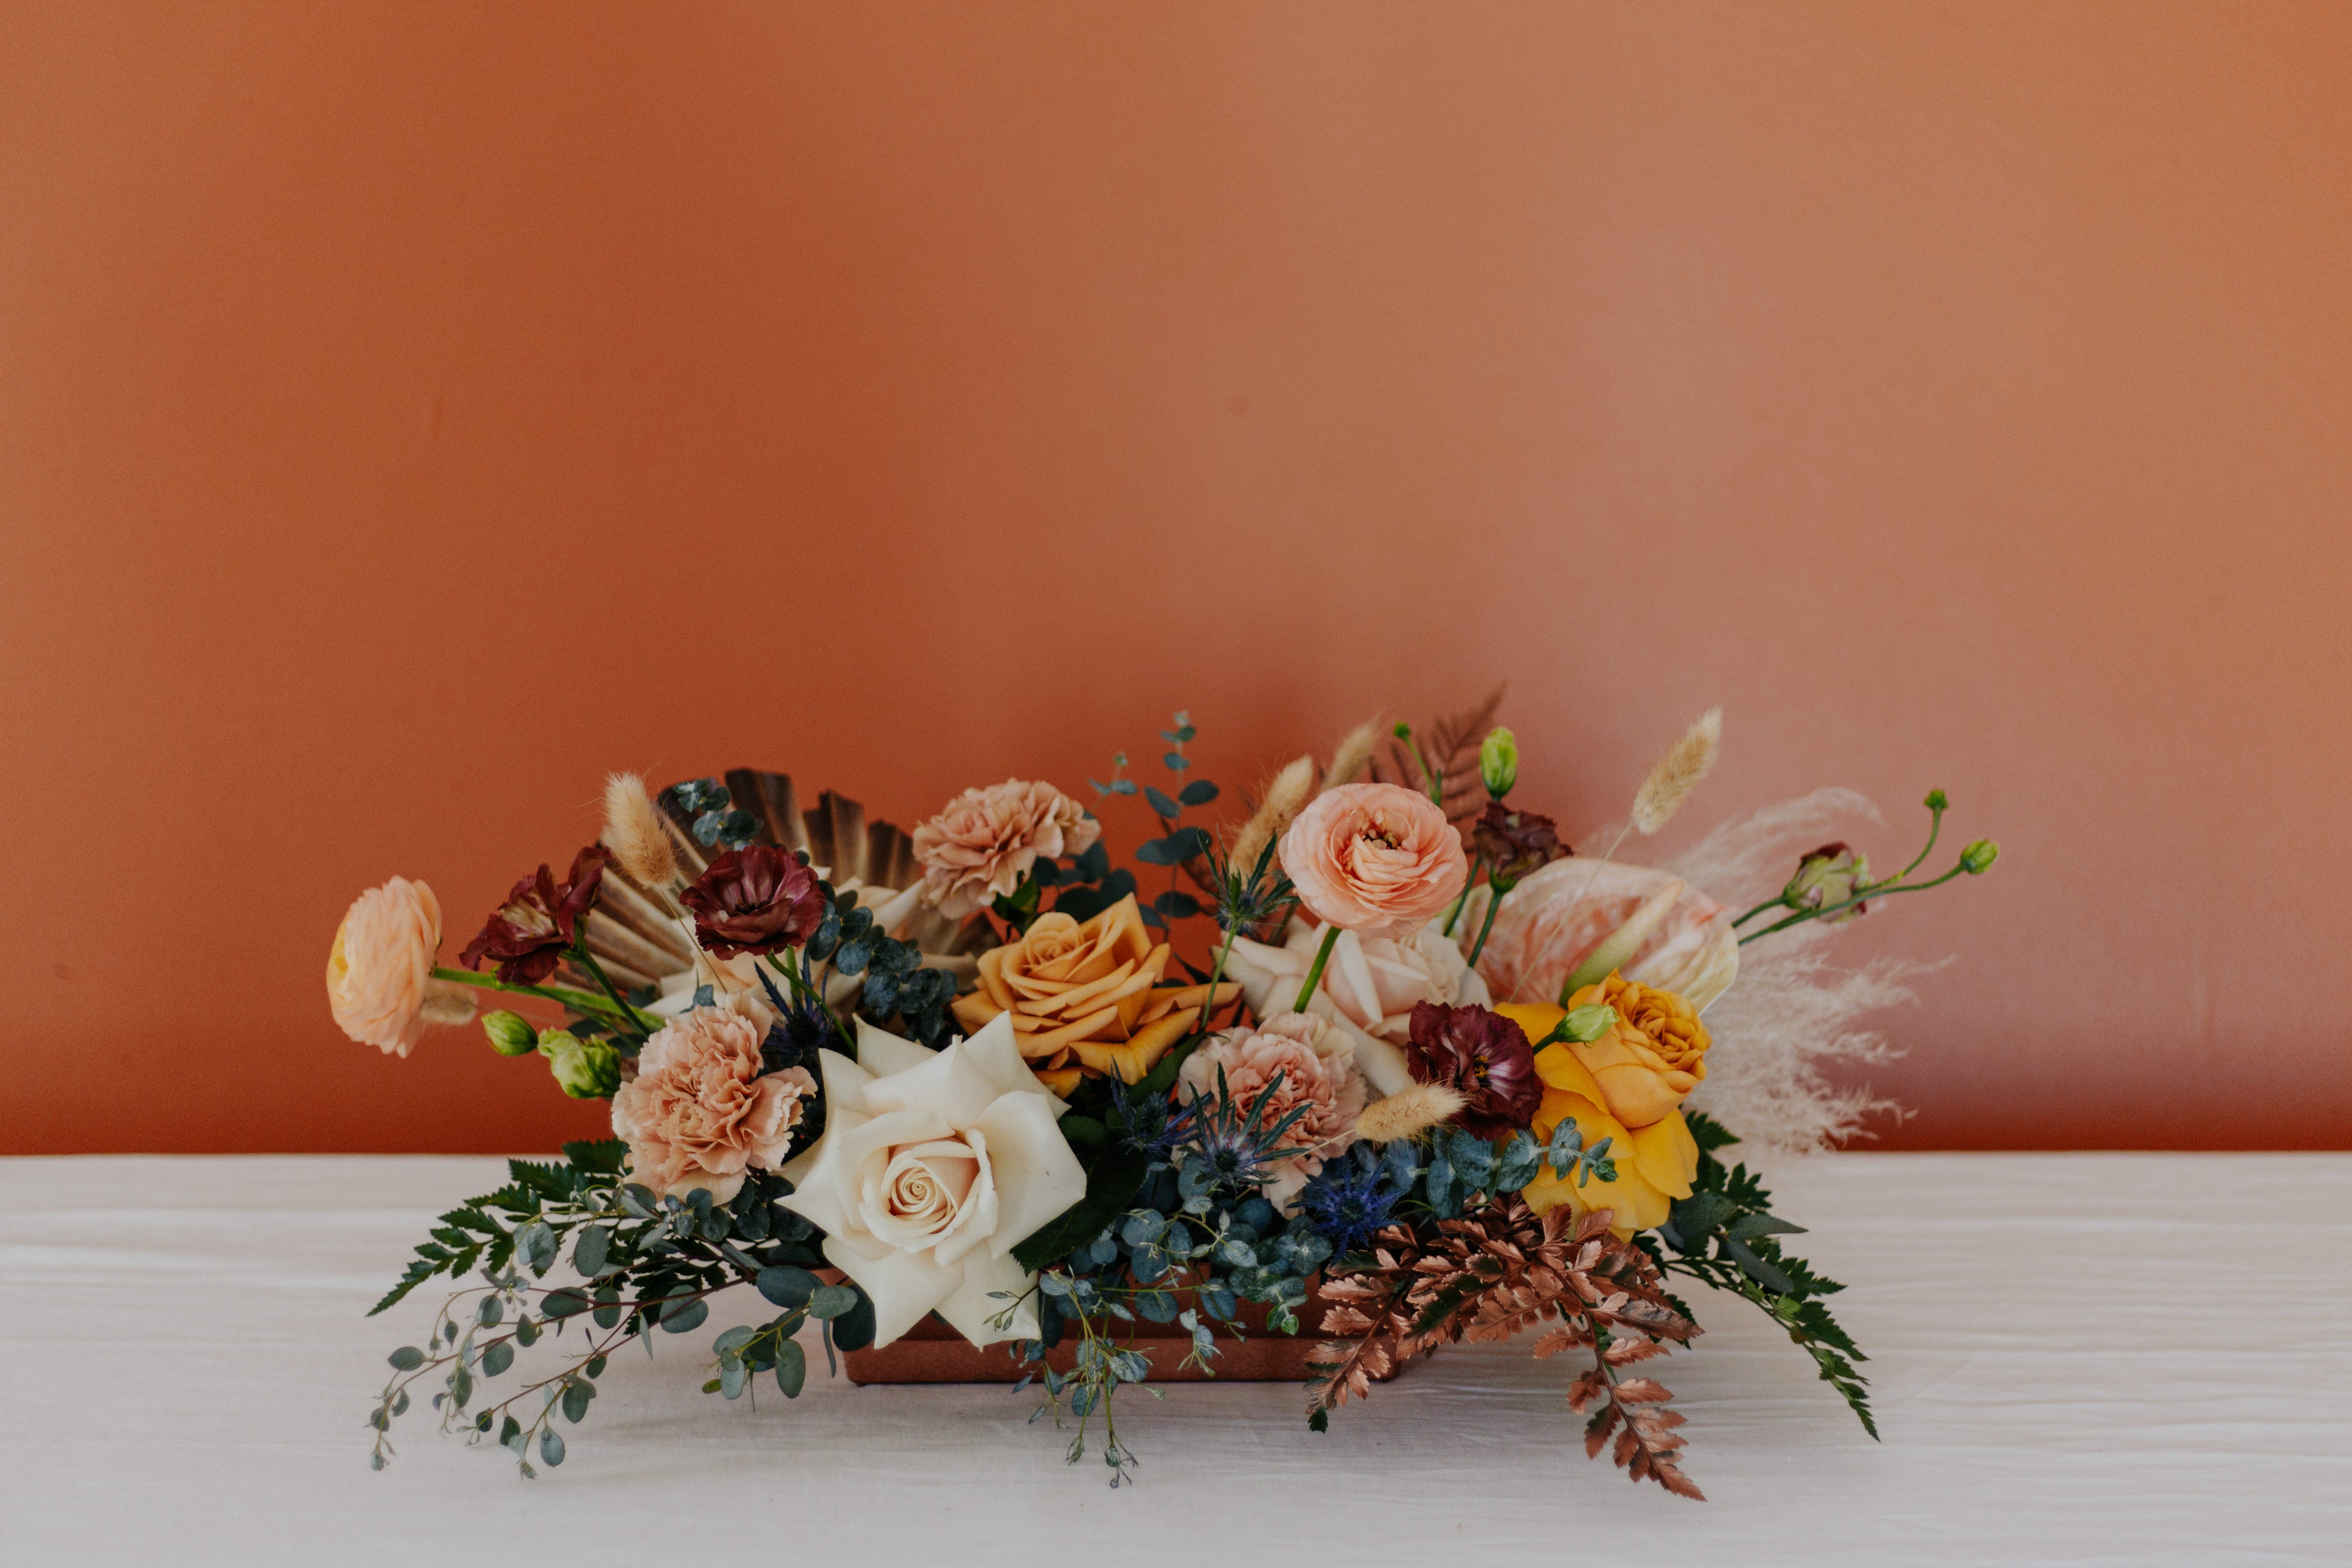 How To Get Boho Wedding Flowers on a Budget